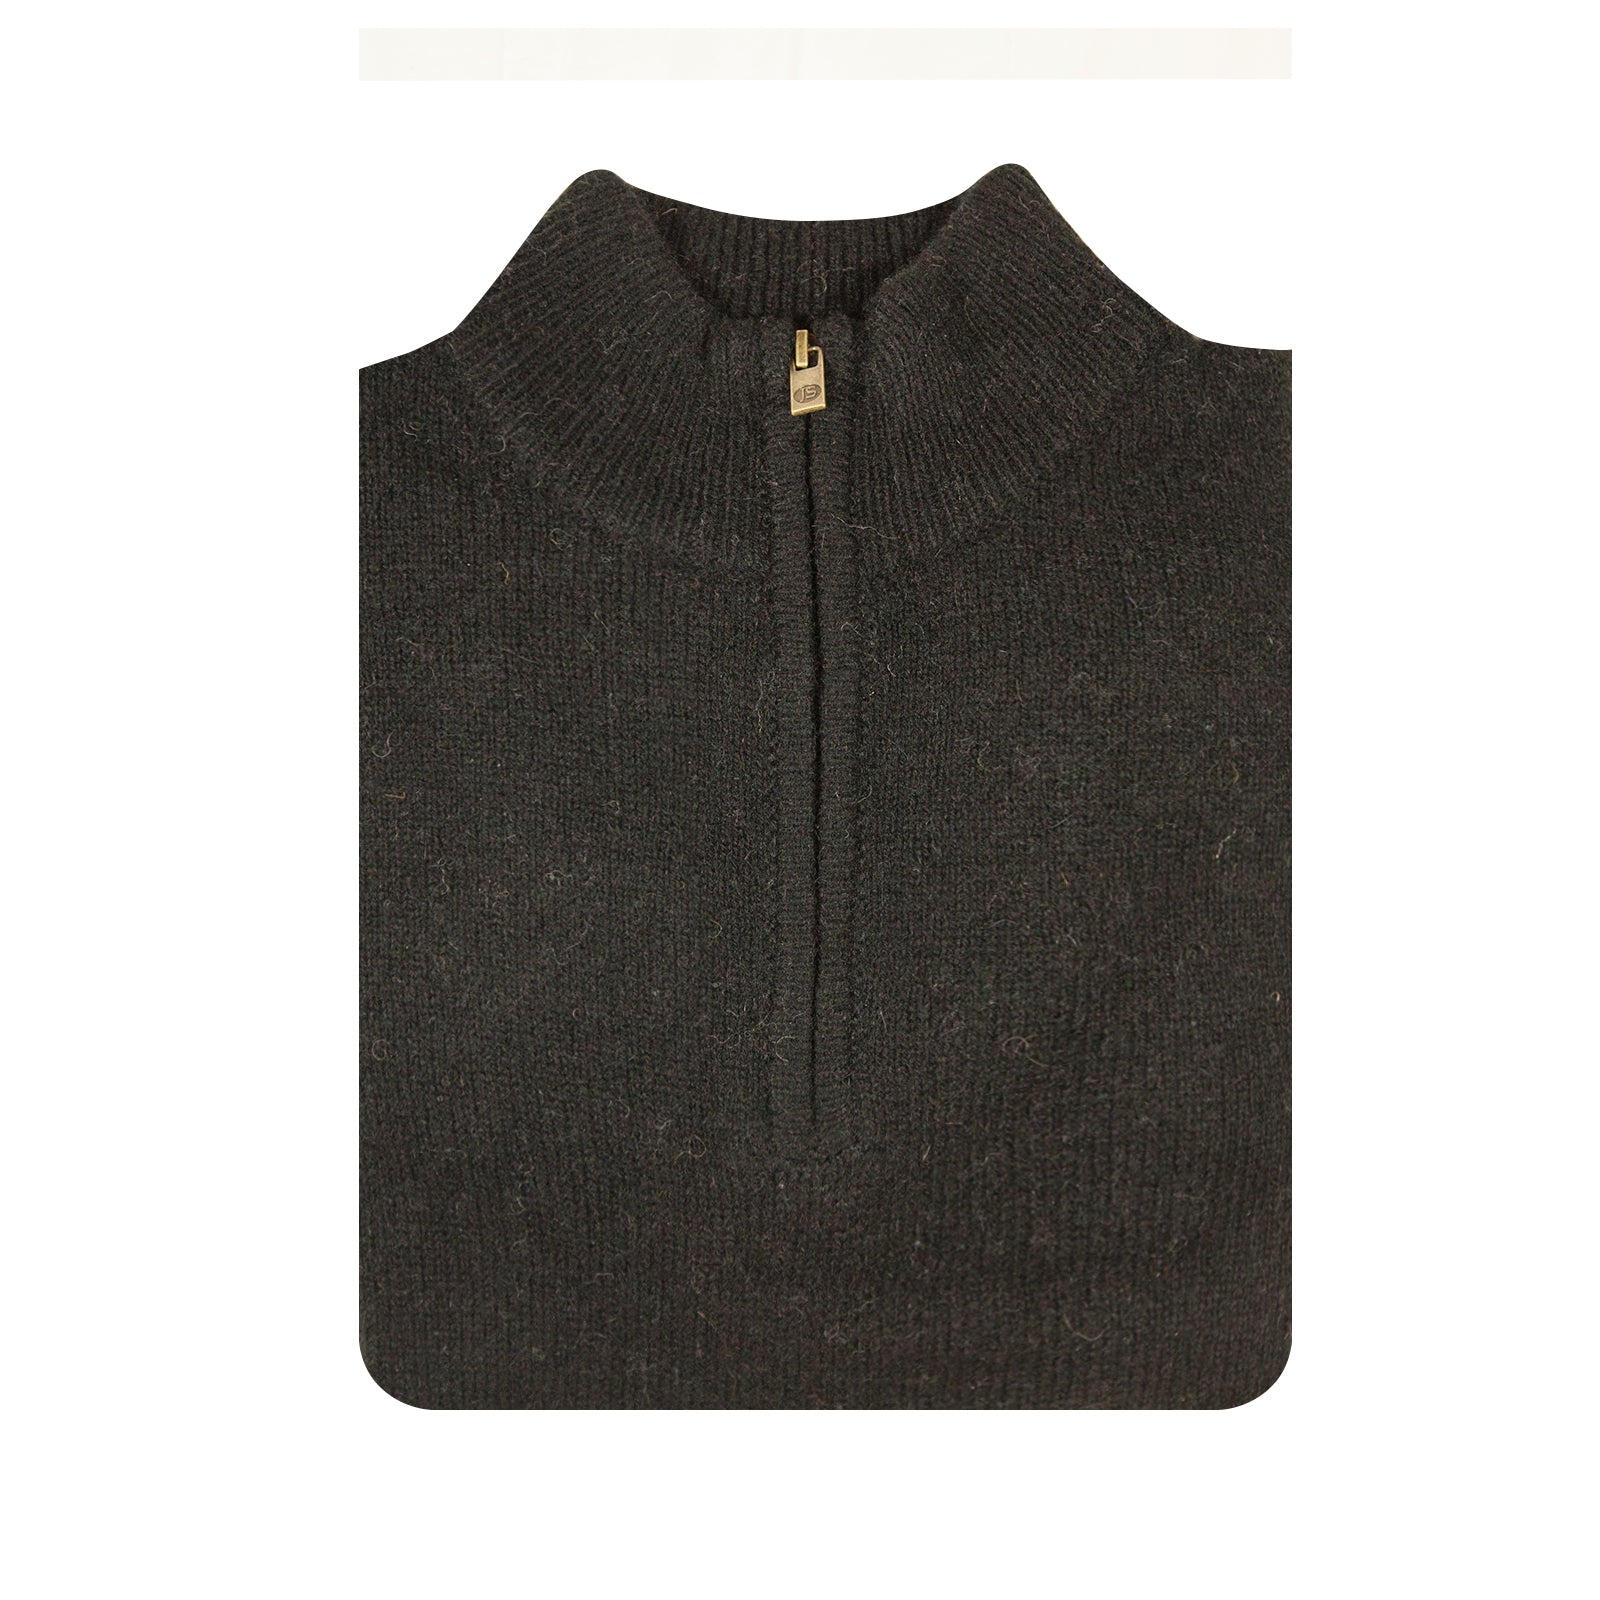 100% SHETLAND WOOL Half Zip Up Knit JUMPER Pullover Mens Sweater Knitted - Plain Black - S